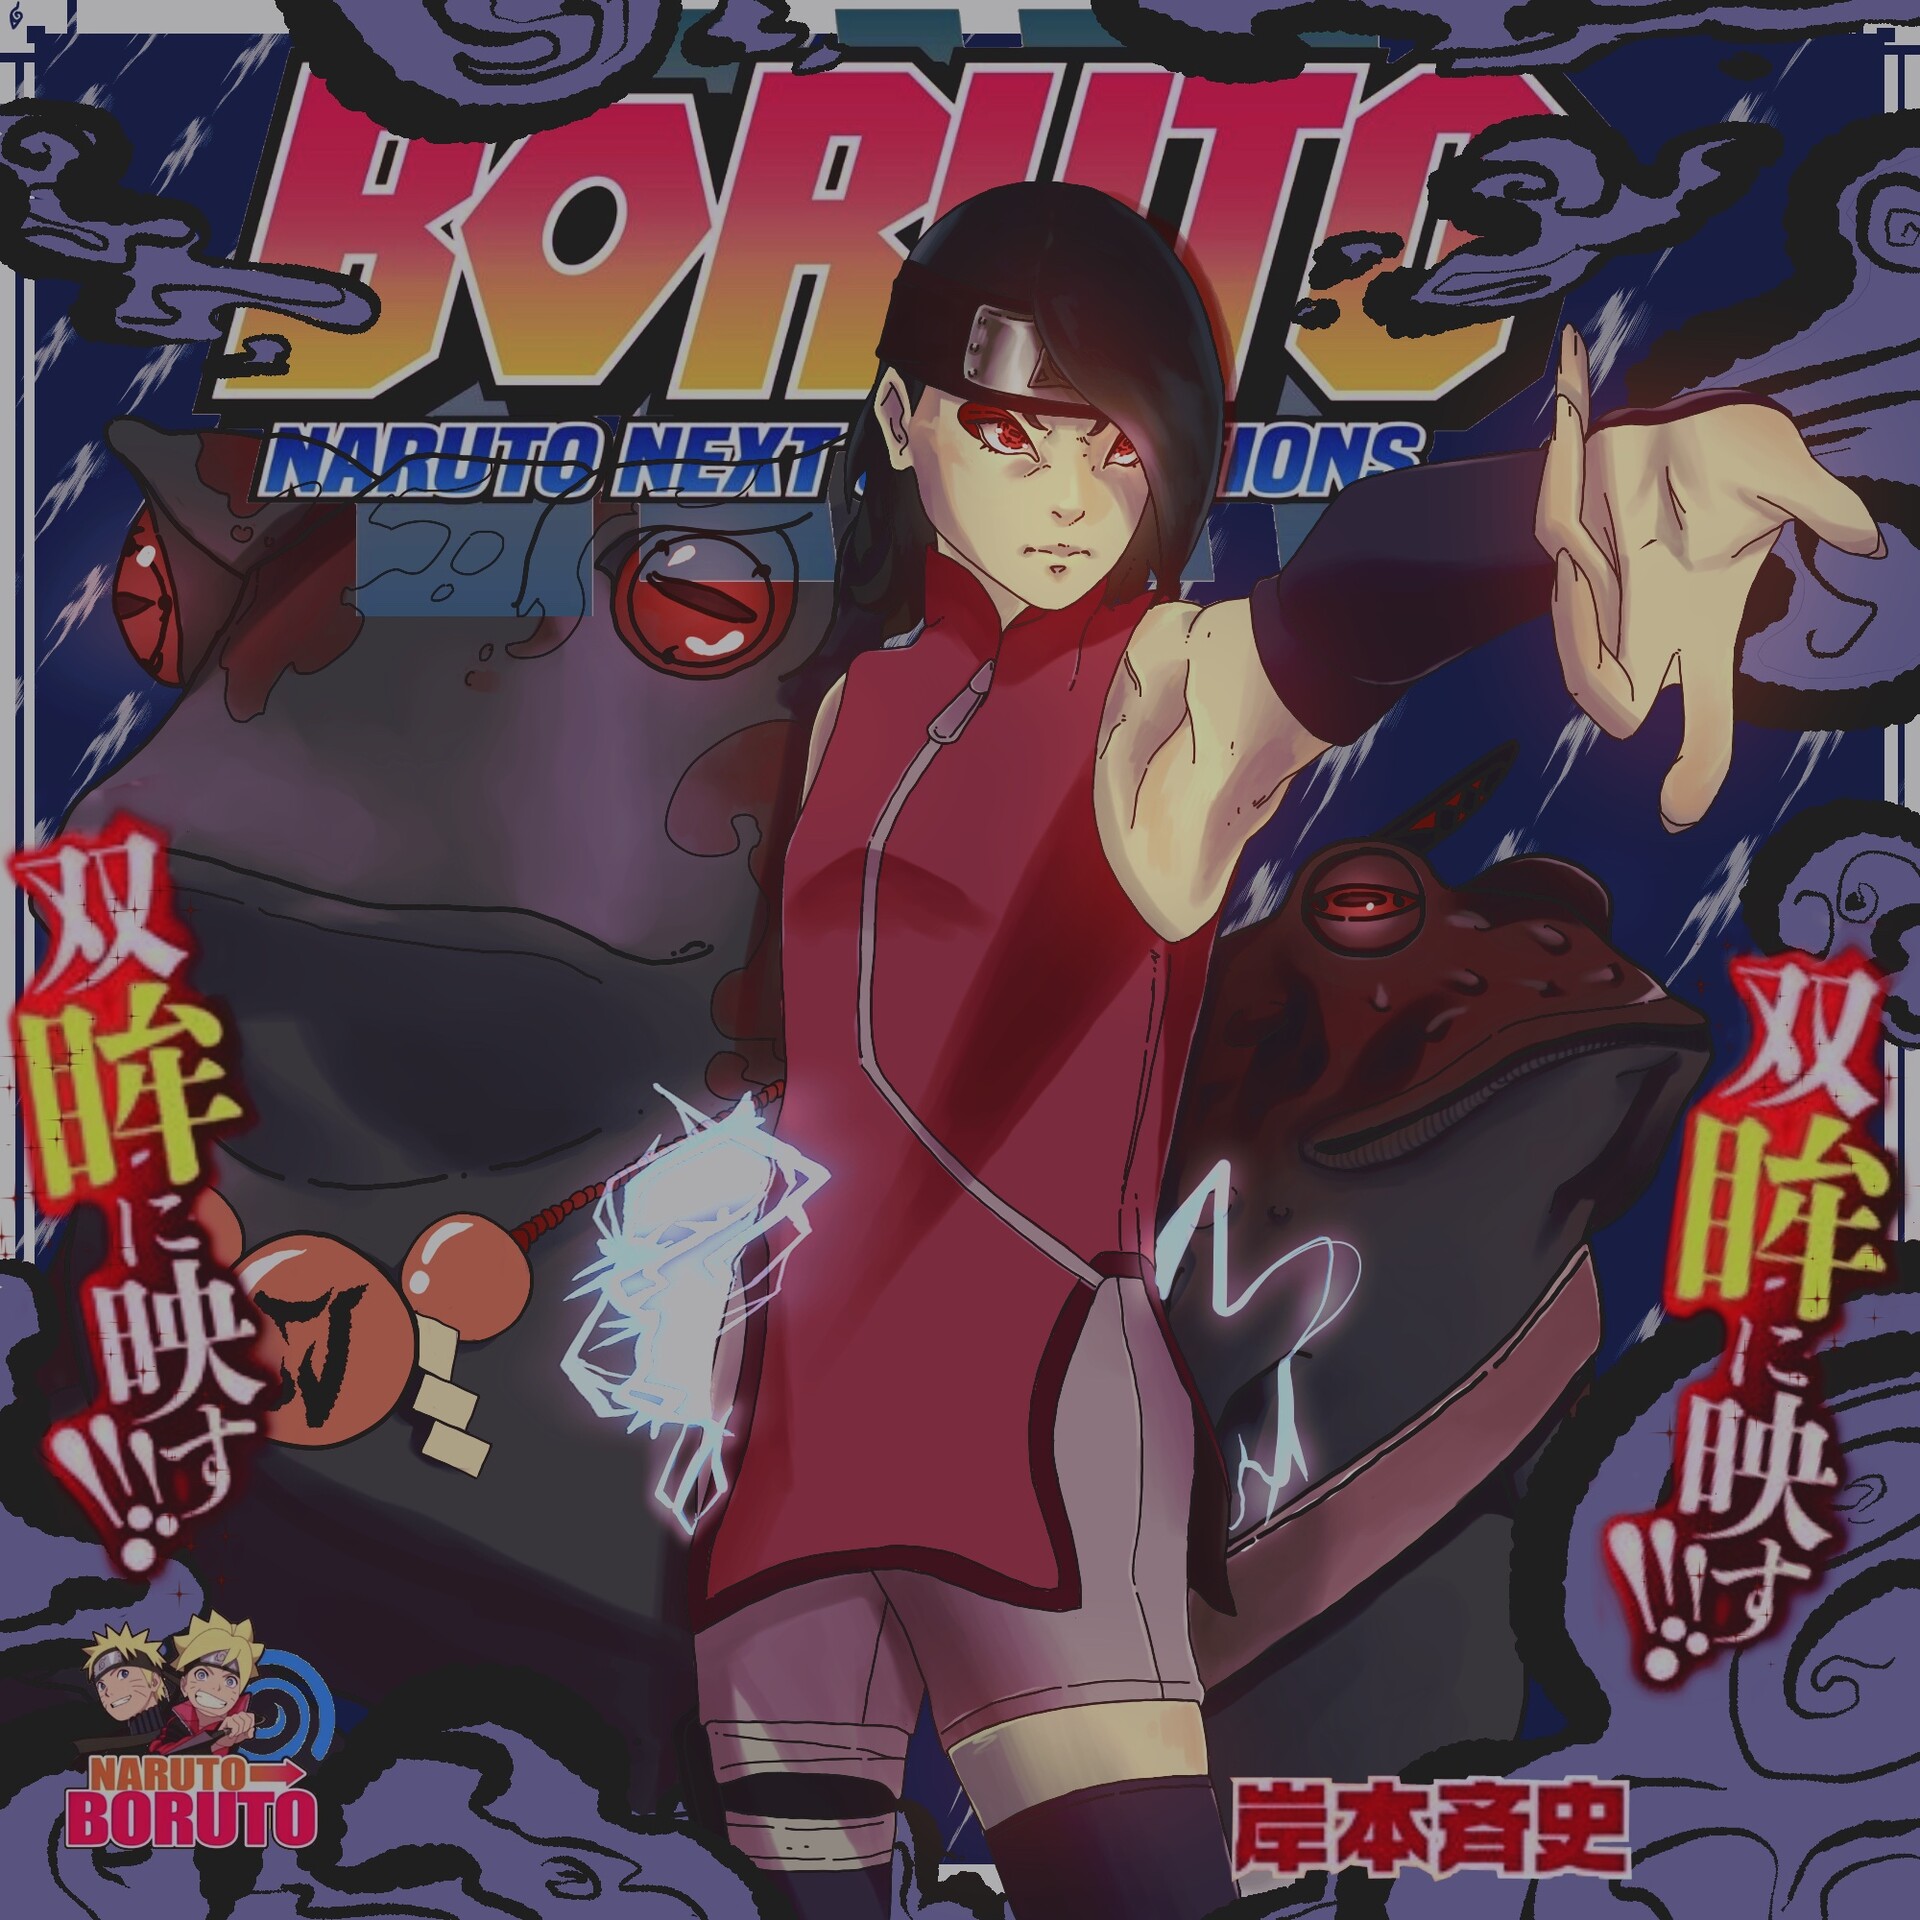  Sarada Uchiha Poster Anime Manga Print Sarada Boruto